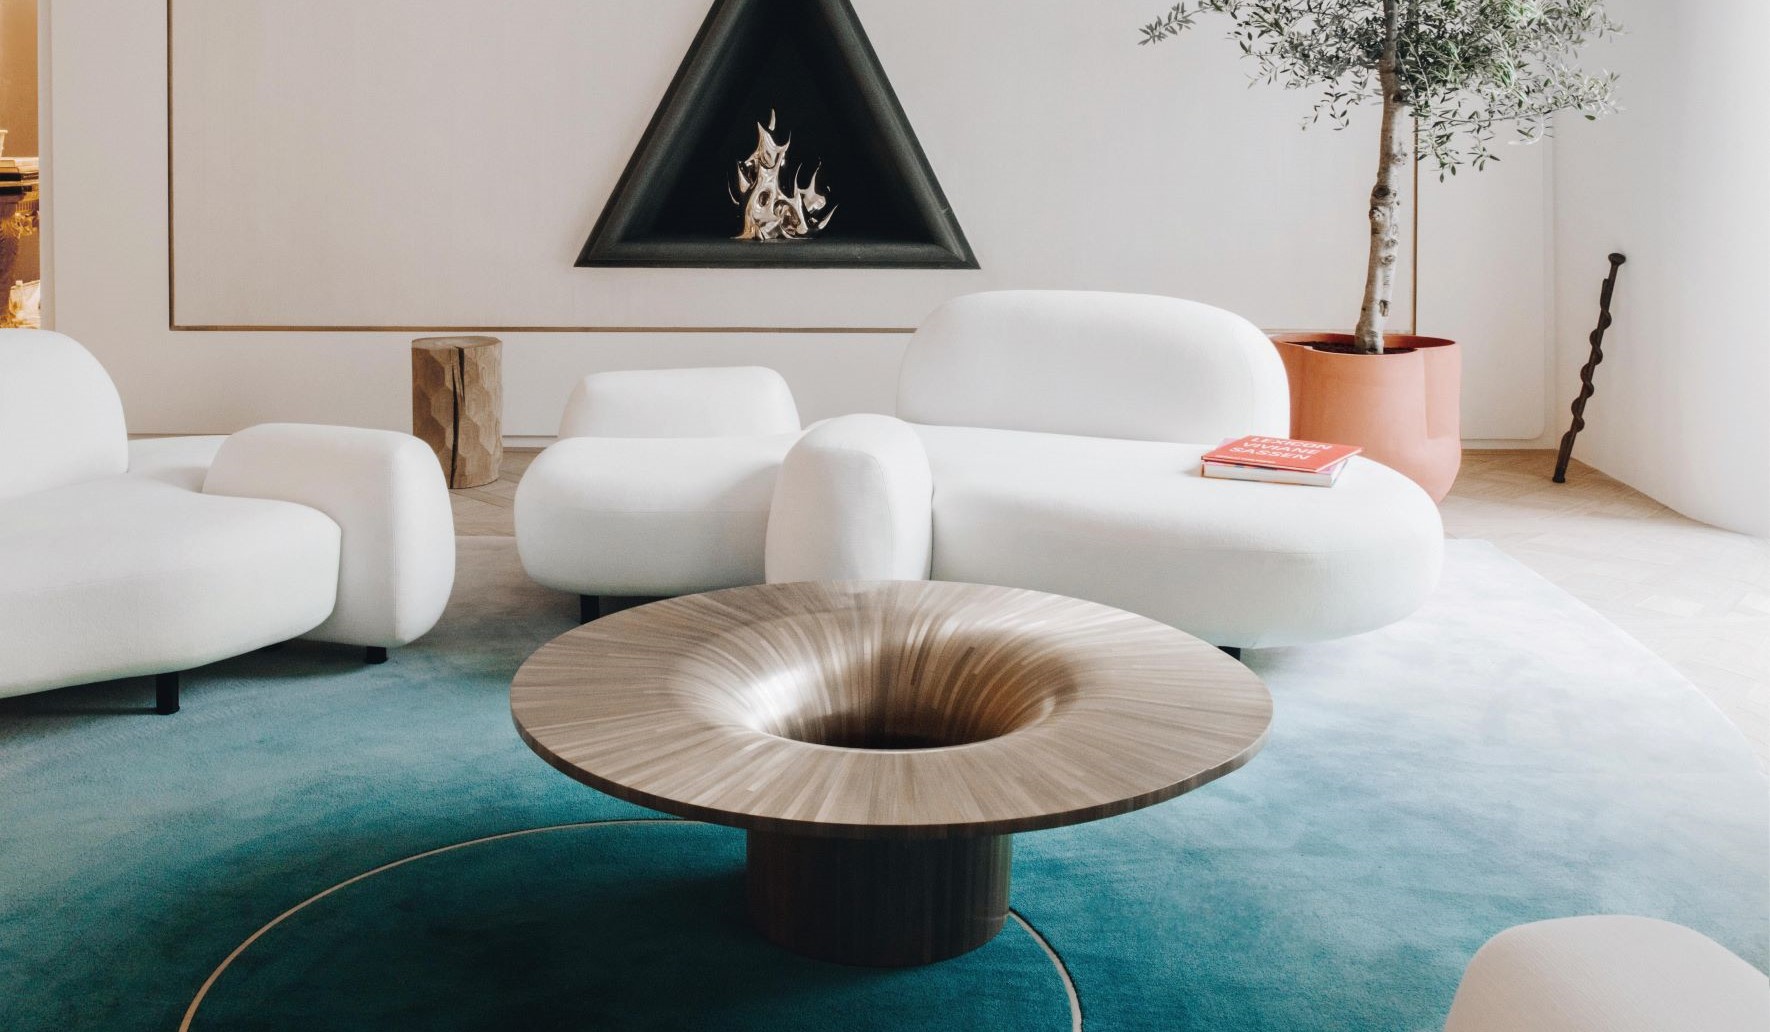 Lison de Caunes 也為科技藝術家 Mathieu Lehanneur 的客廳設計稻稈茶几，細膩光澤與弧度猶如金屬藝術。